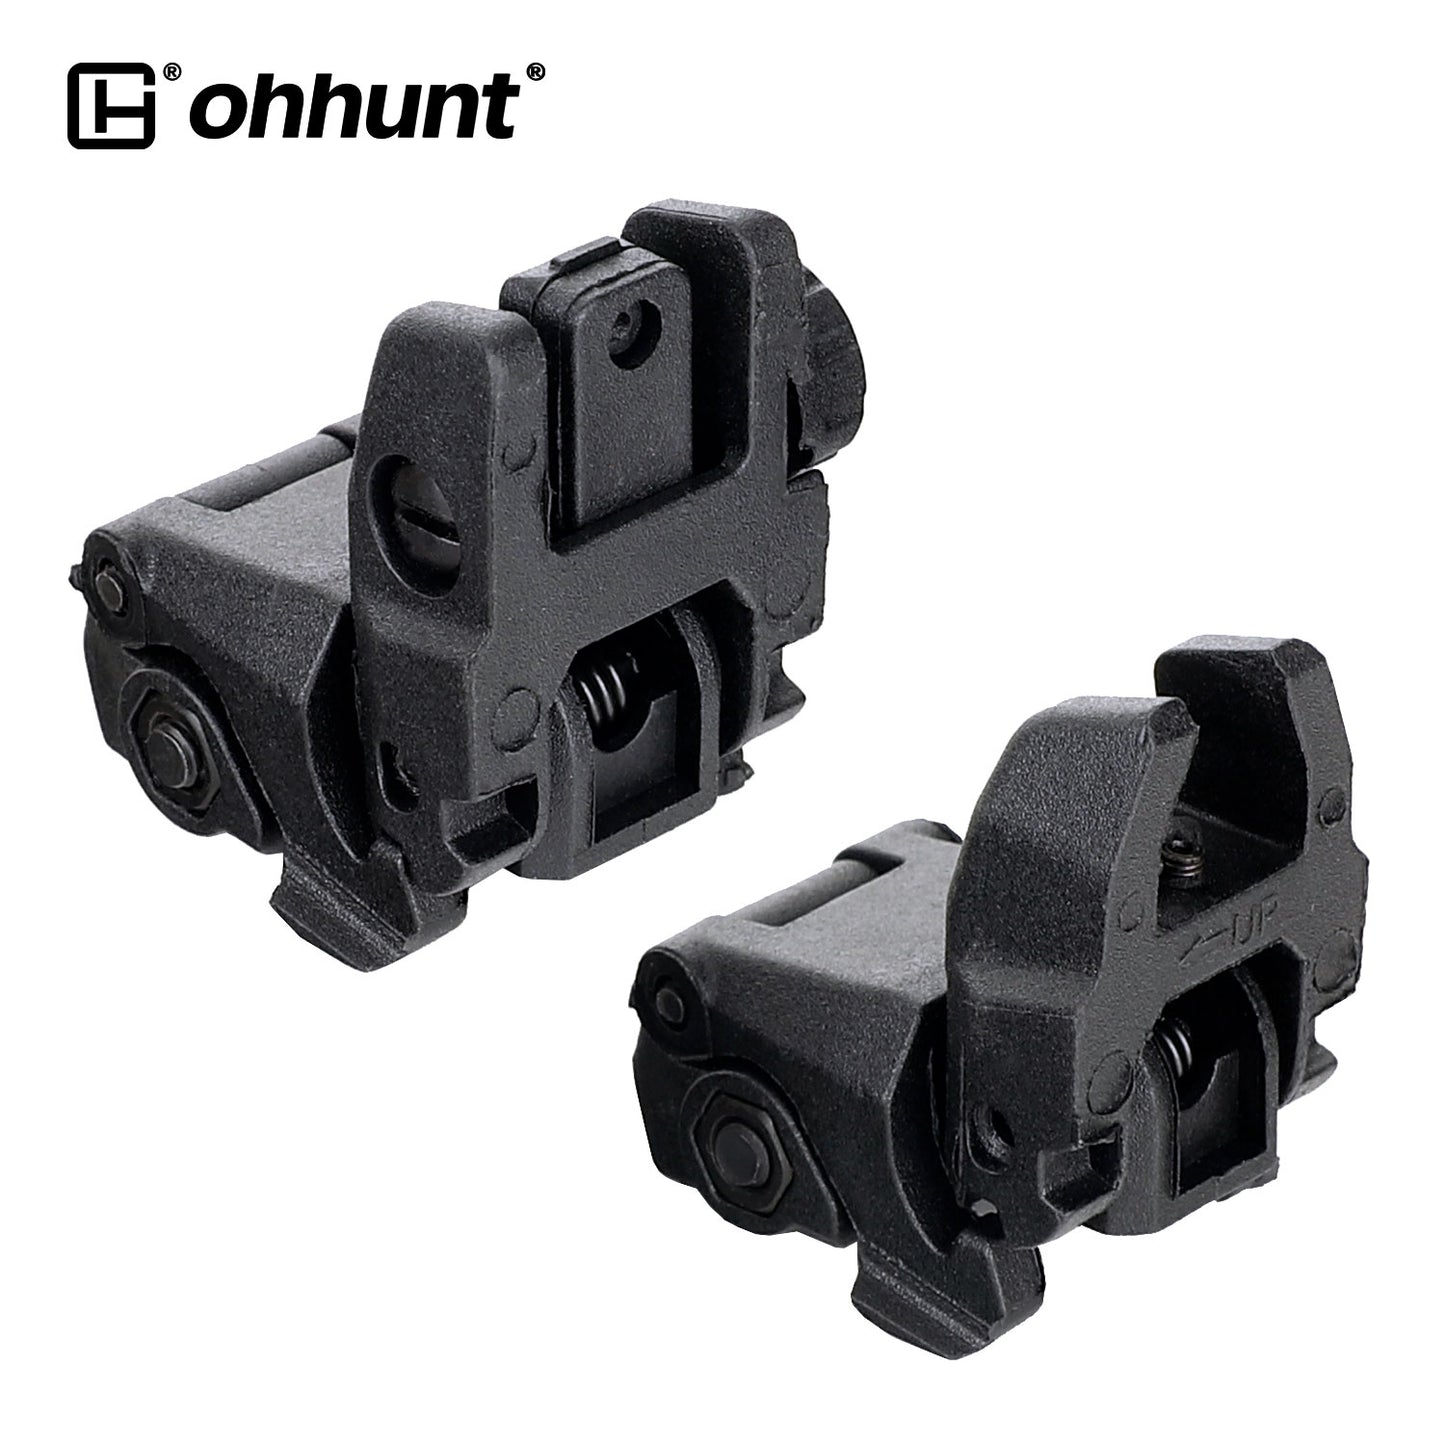 Ohhunt 5 Pairs Polymer AR15 Flip up Sight Iron Sights